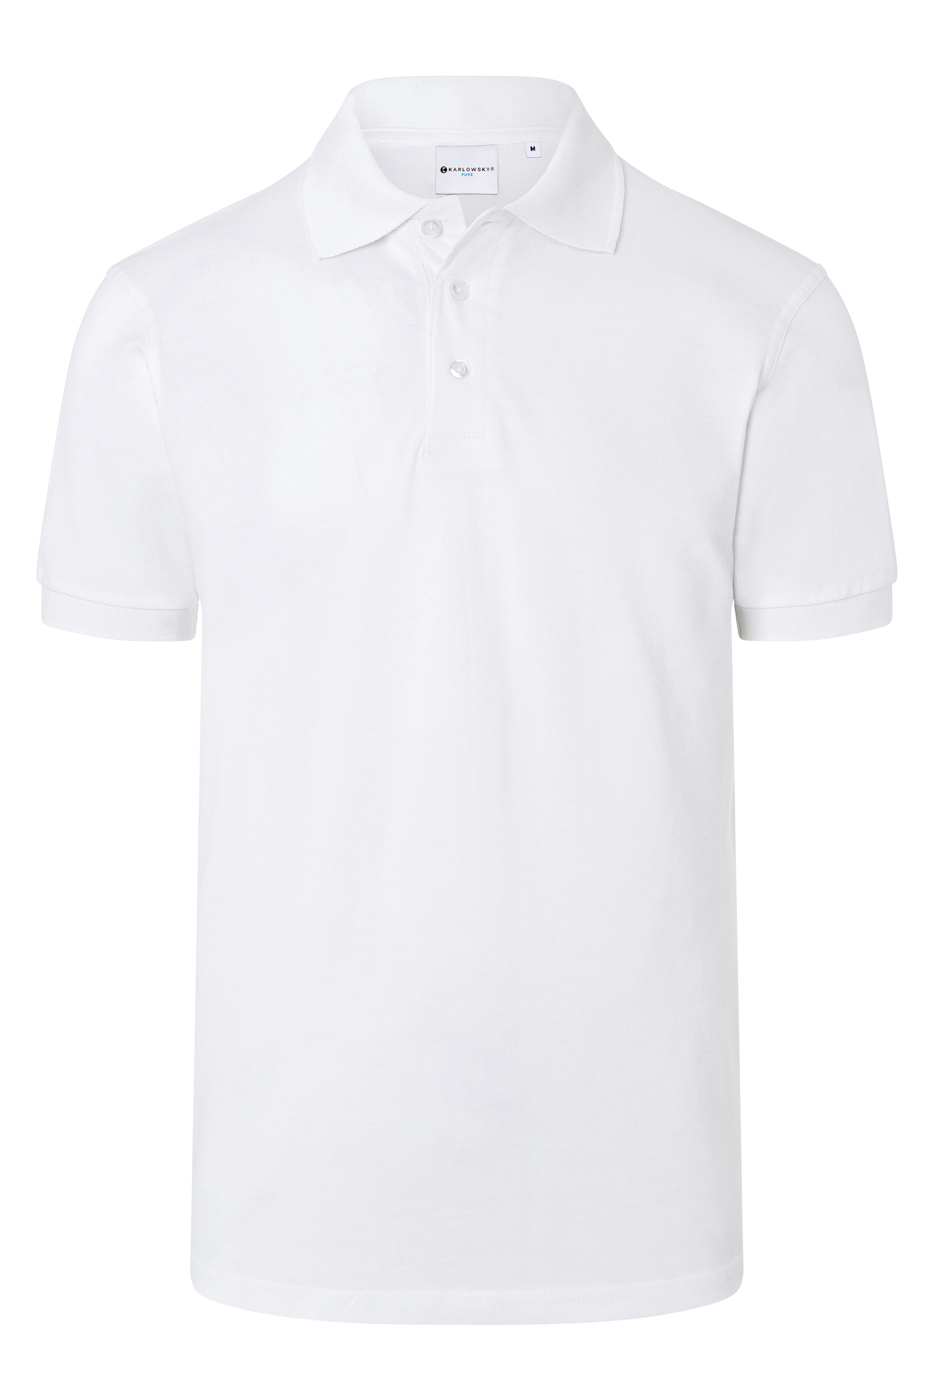 Herren Workwear Poloshirt Basic - Größe: L